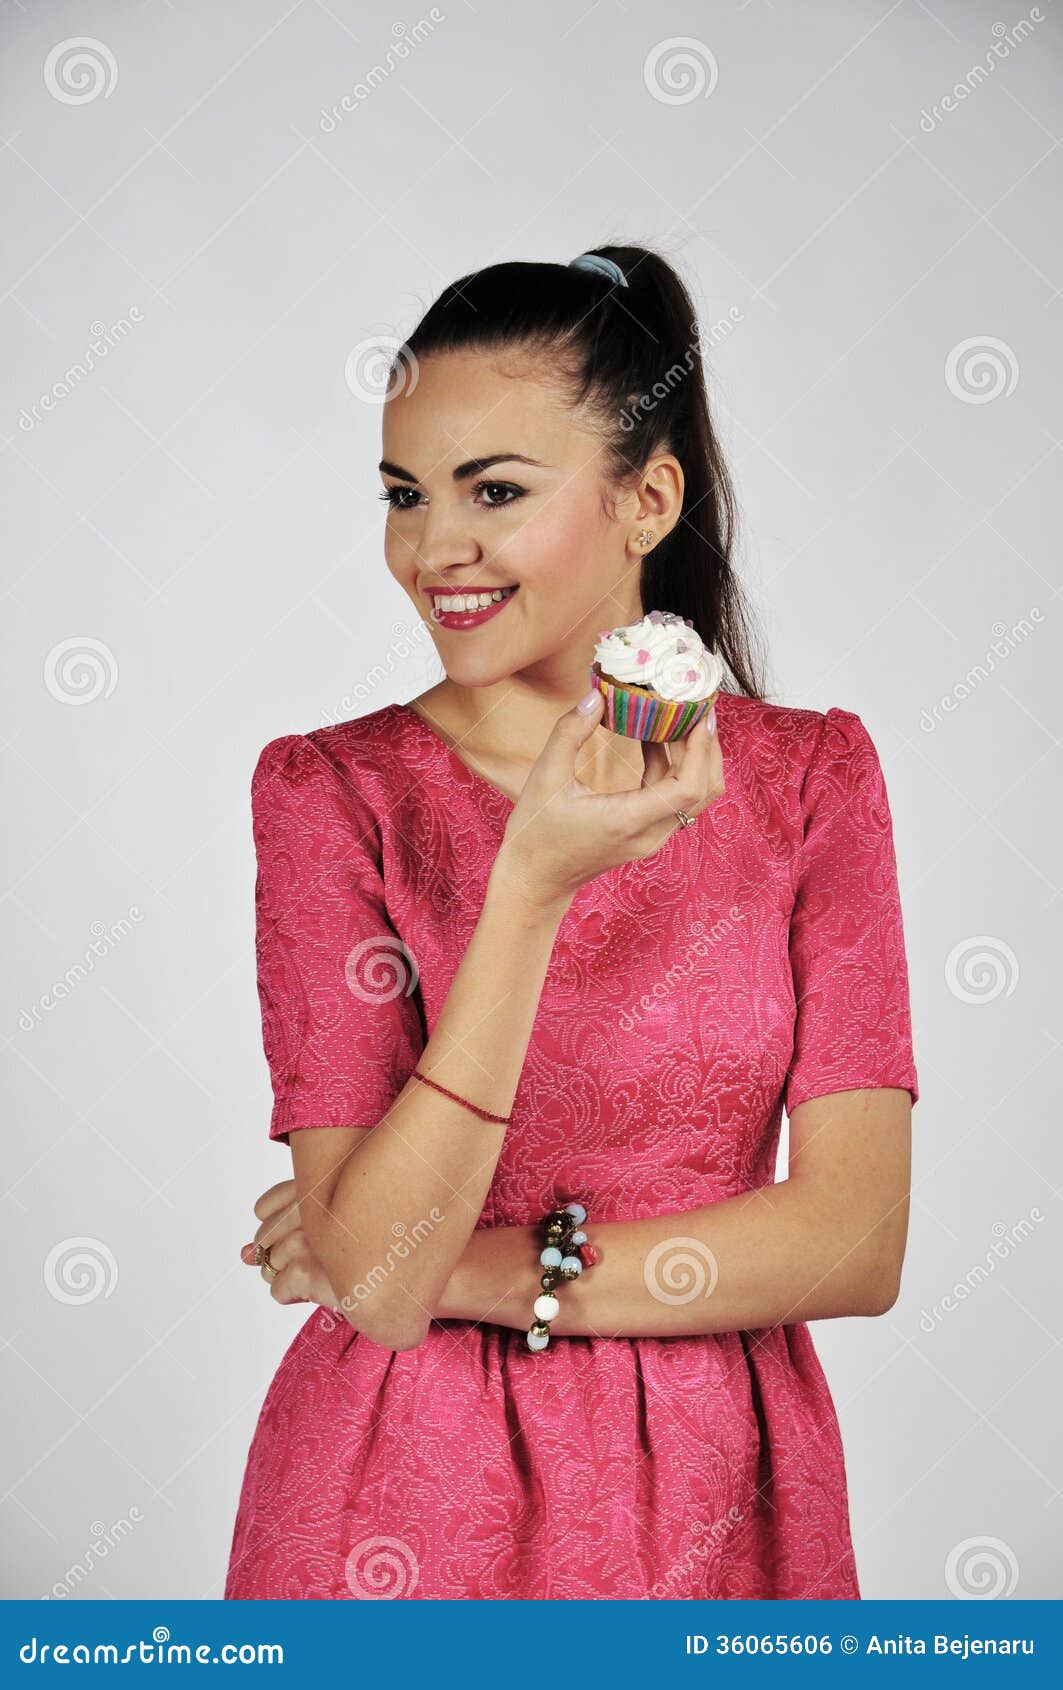 Woman Holding Cupcake Royalty Free Stock Image - Image 